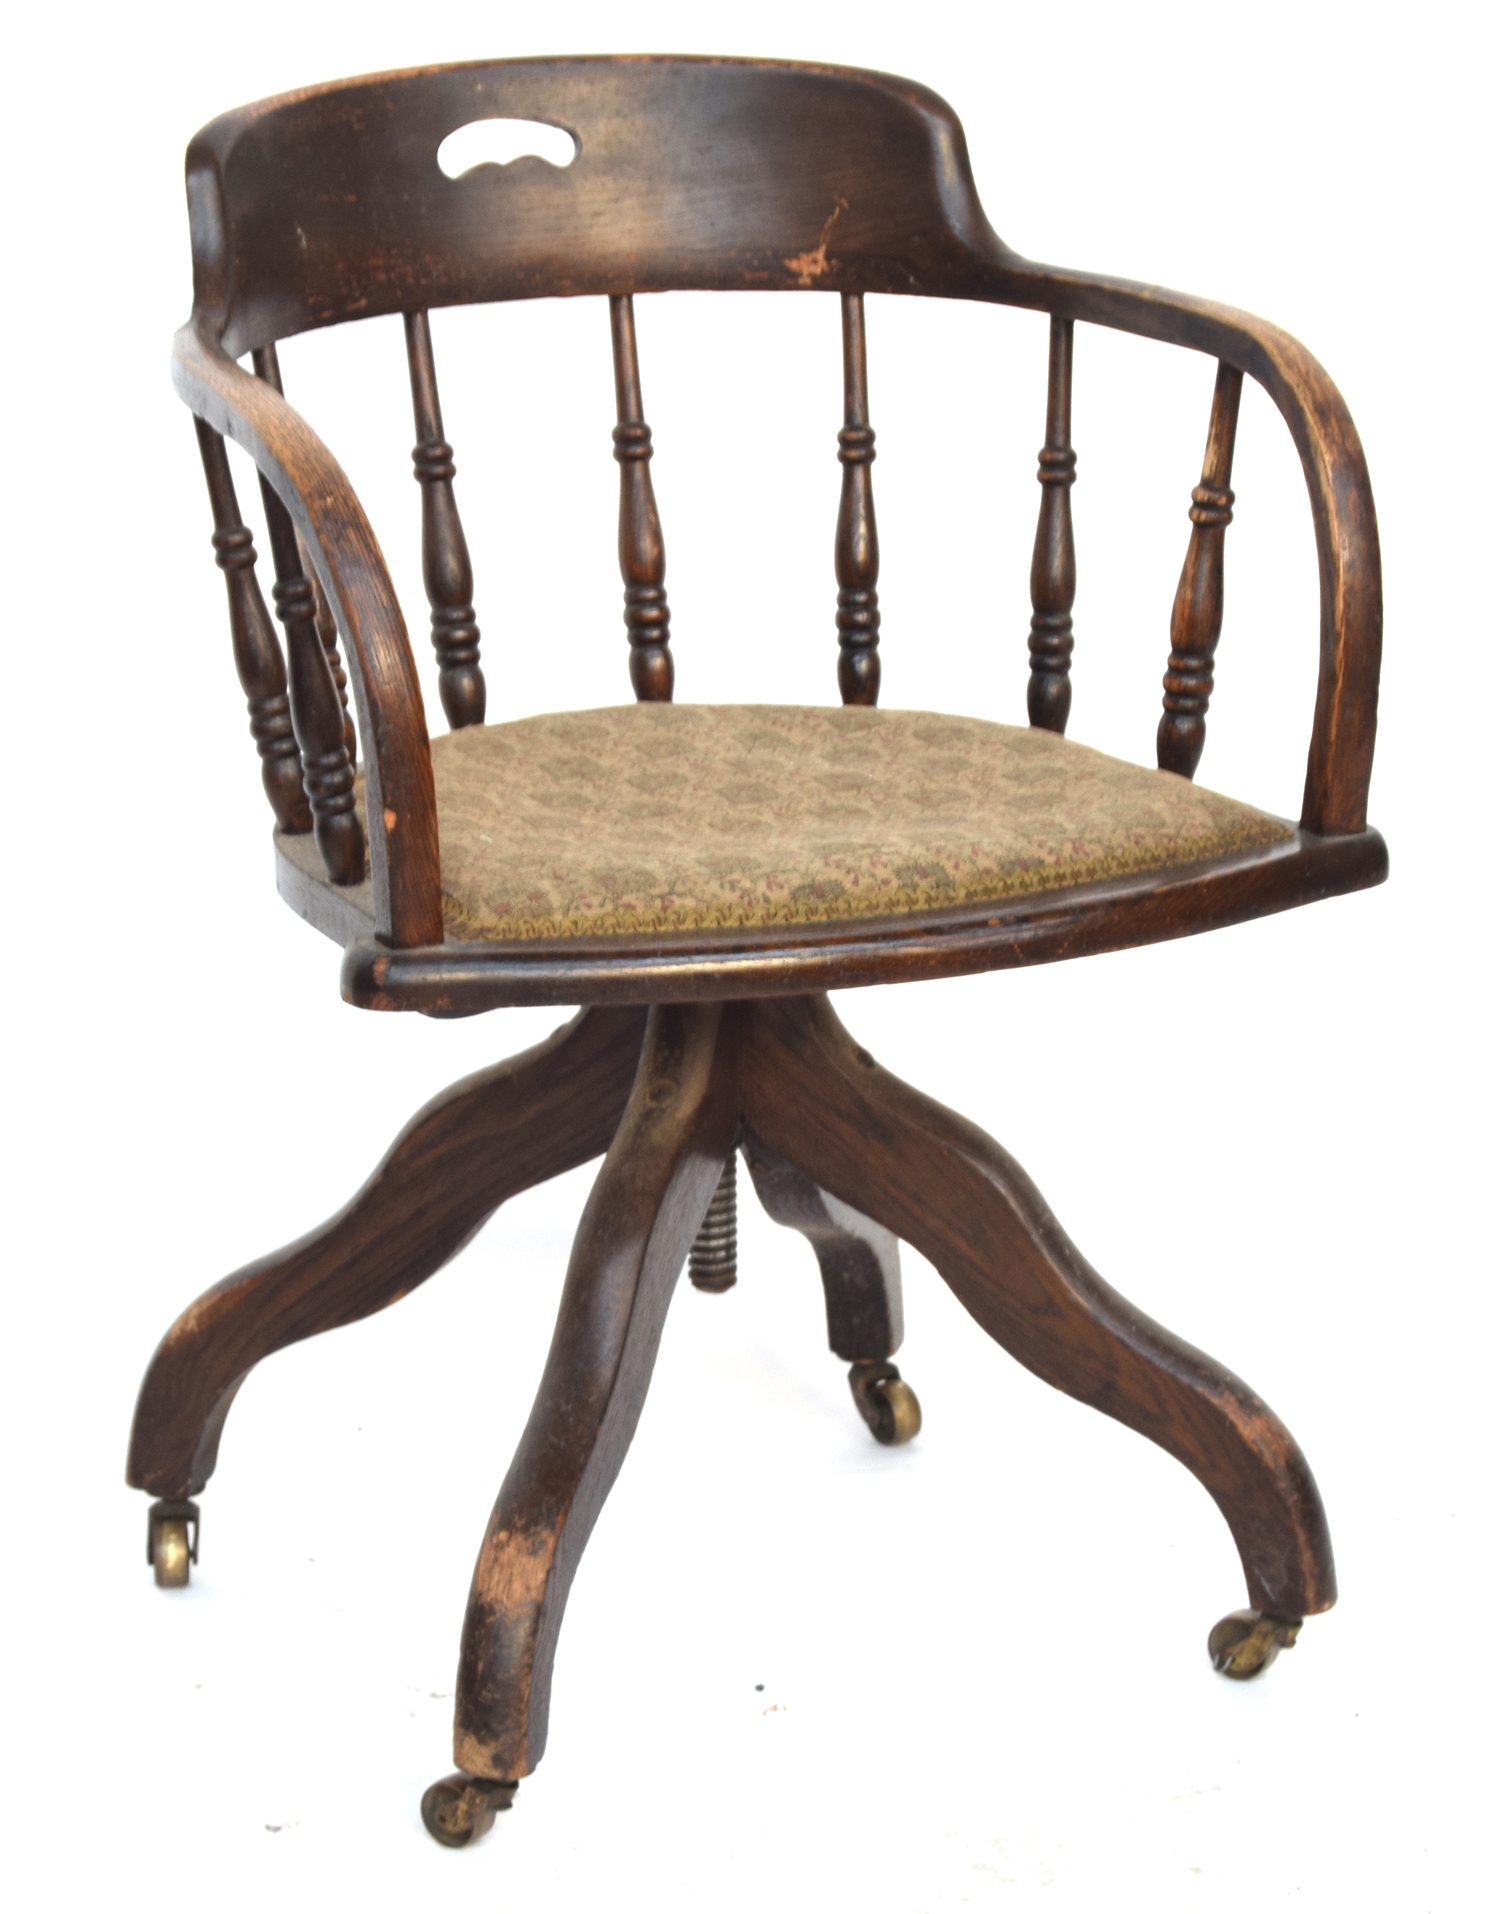 An early 20th century oak adjustable swivel office chair, on brass casters, 54cmW